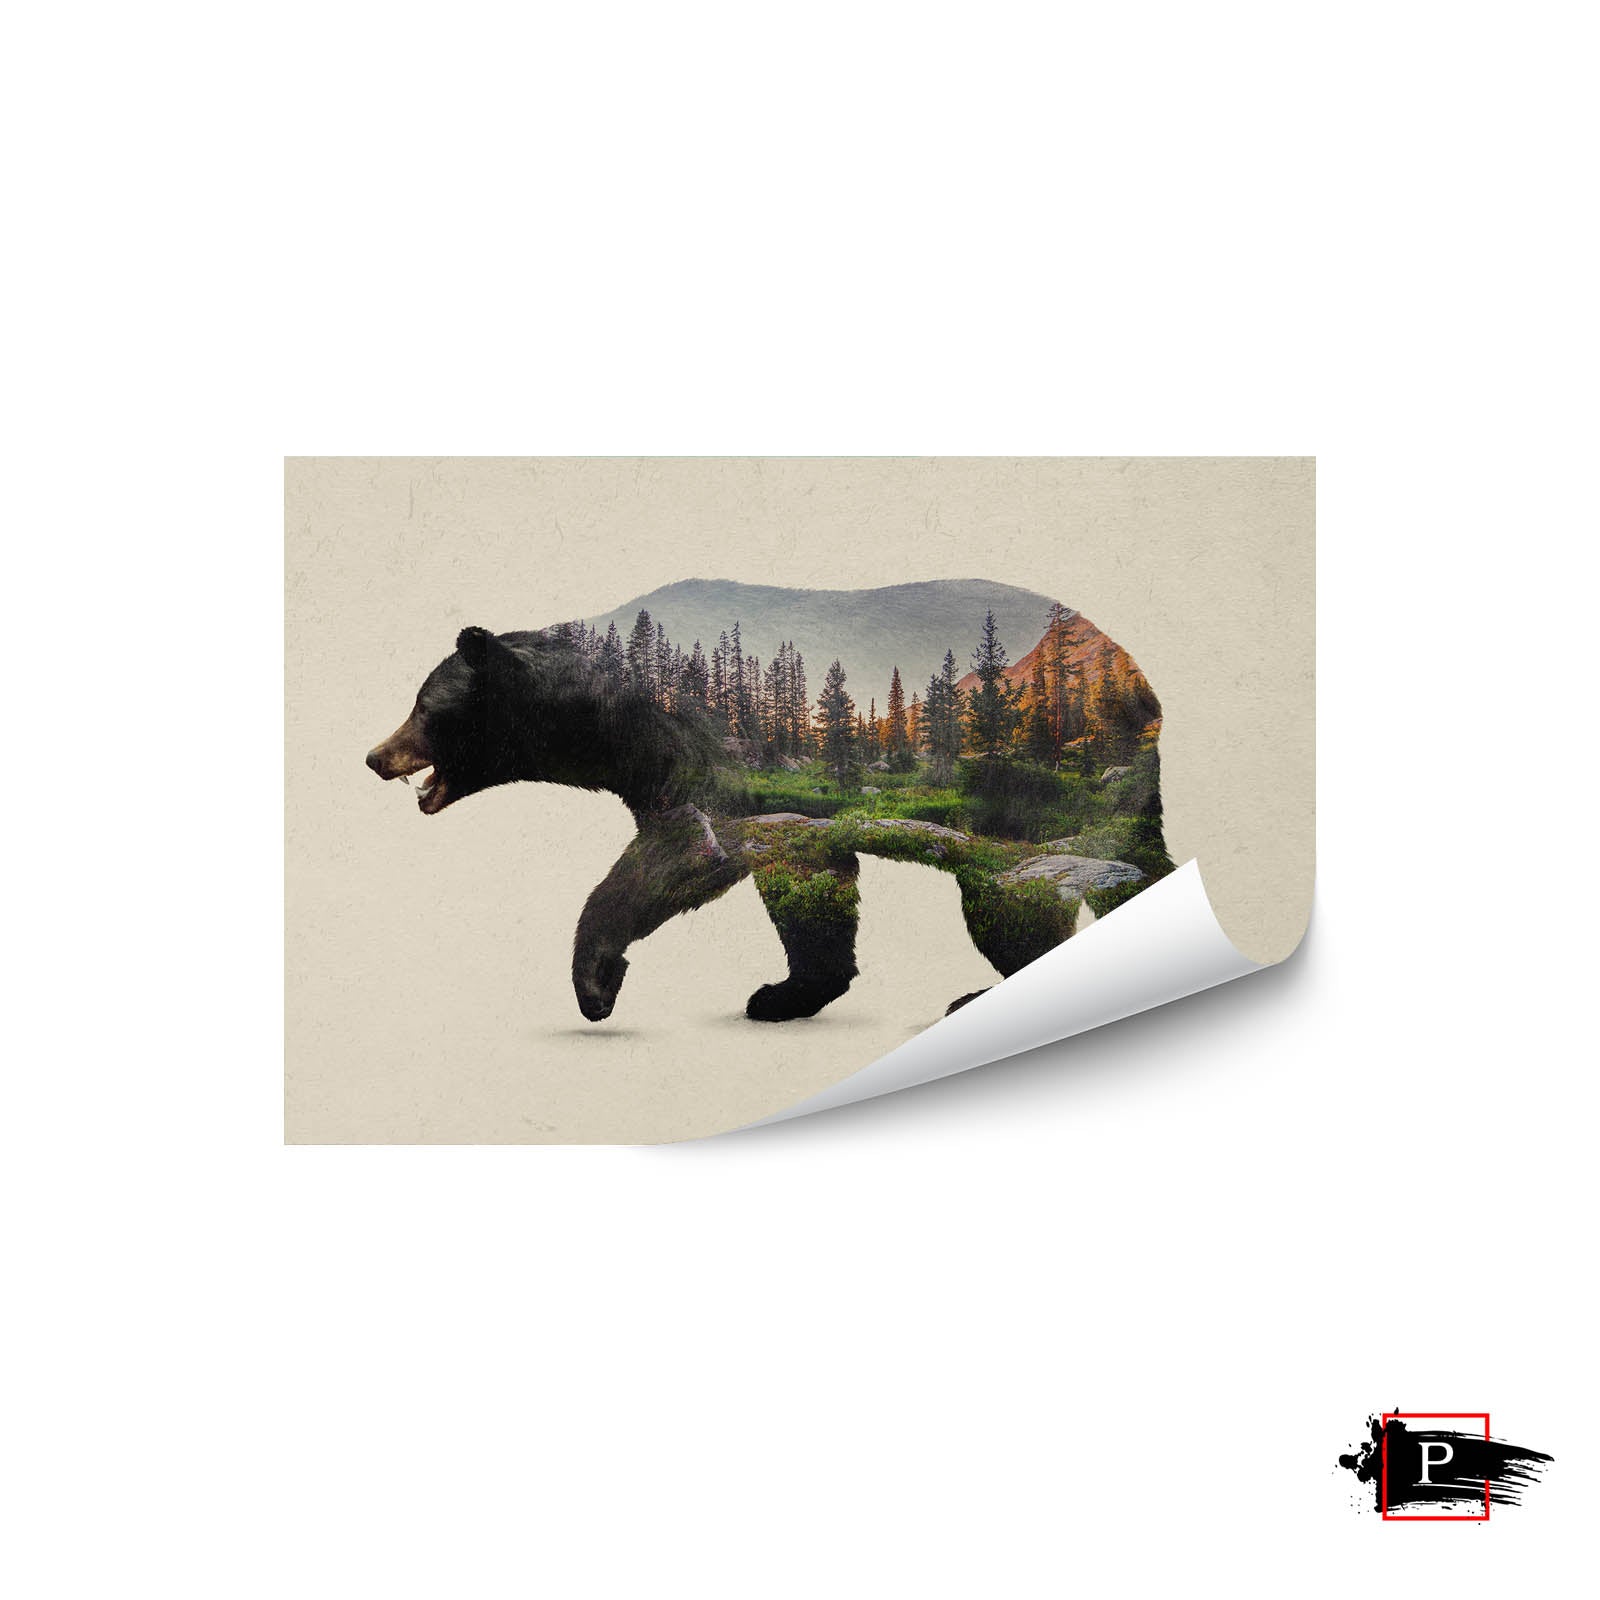 The North American Black Bear